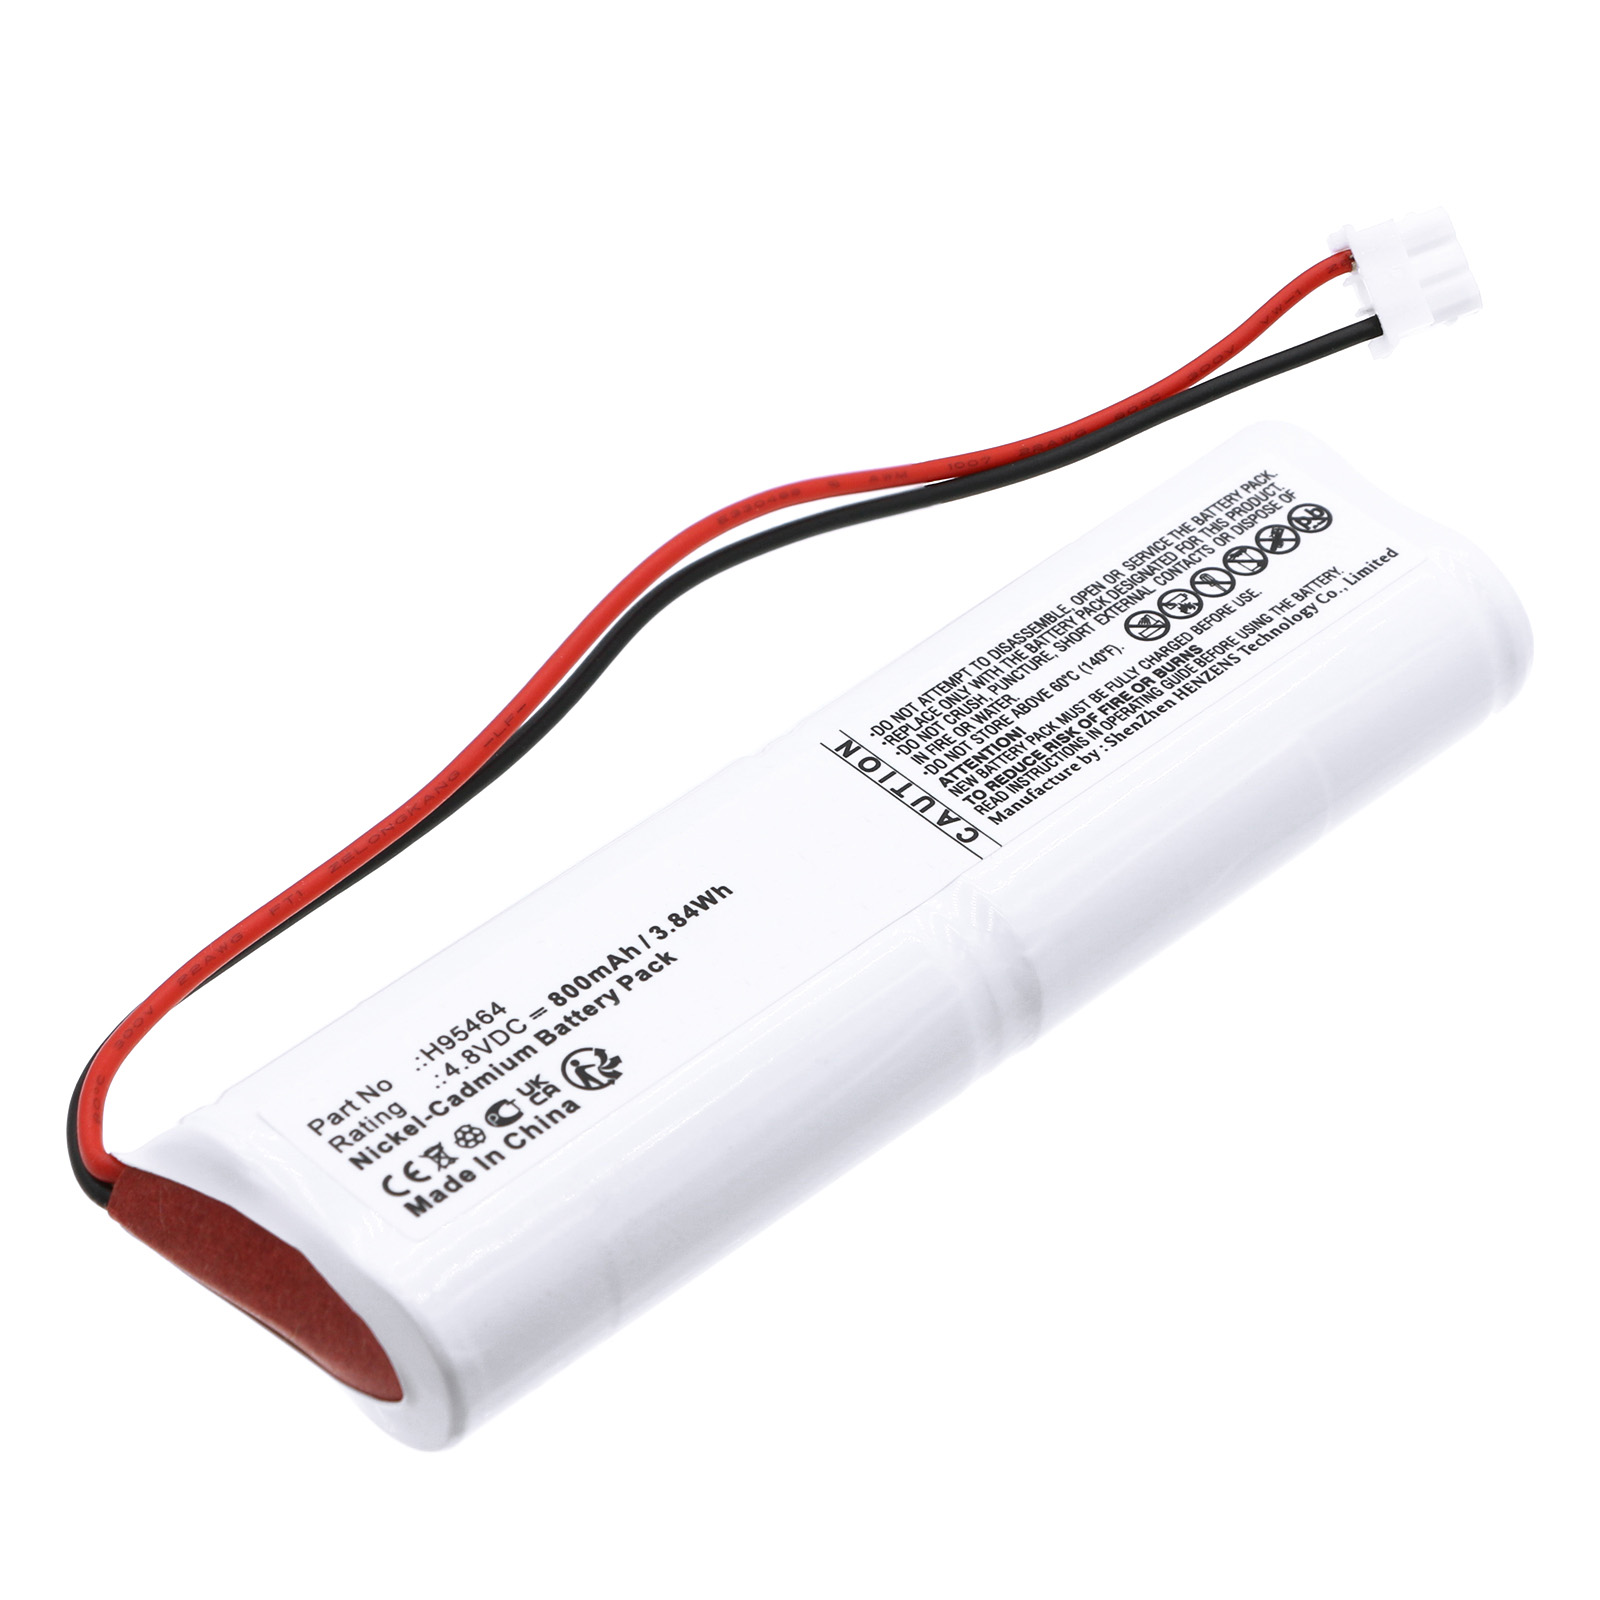 Synergy Digital Emergency Lighting Battery, Compatible with Bticino H95464 Emergency Lighting Battery (Ni-CD, 4.8V, 800mAh)